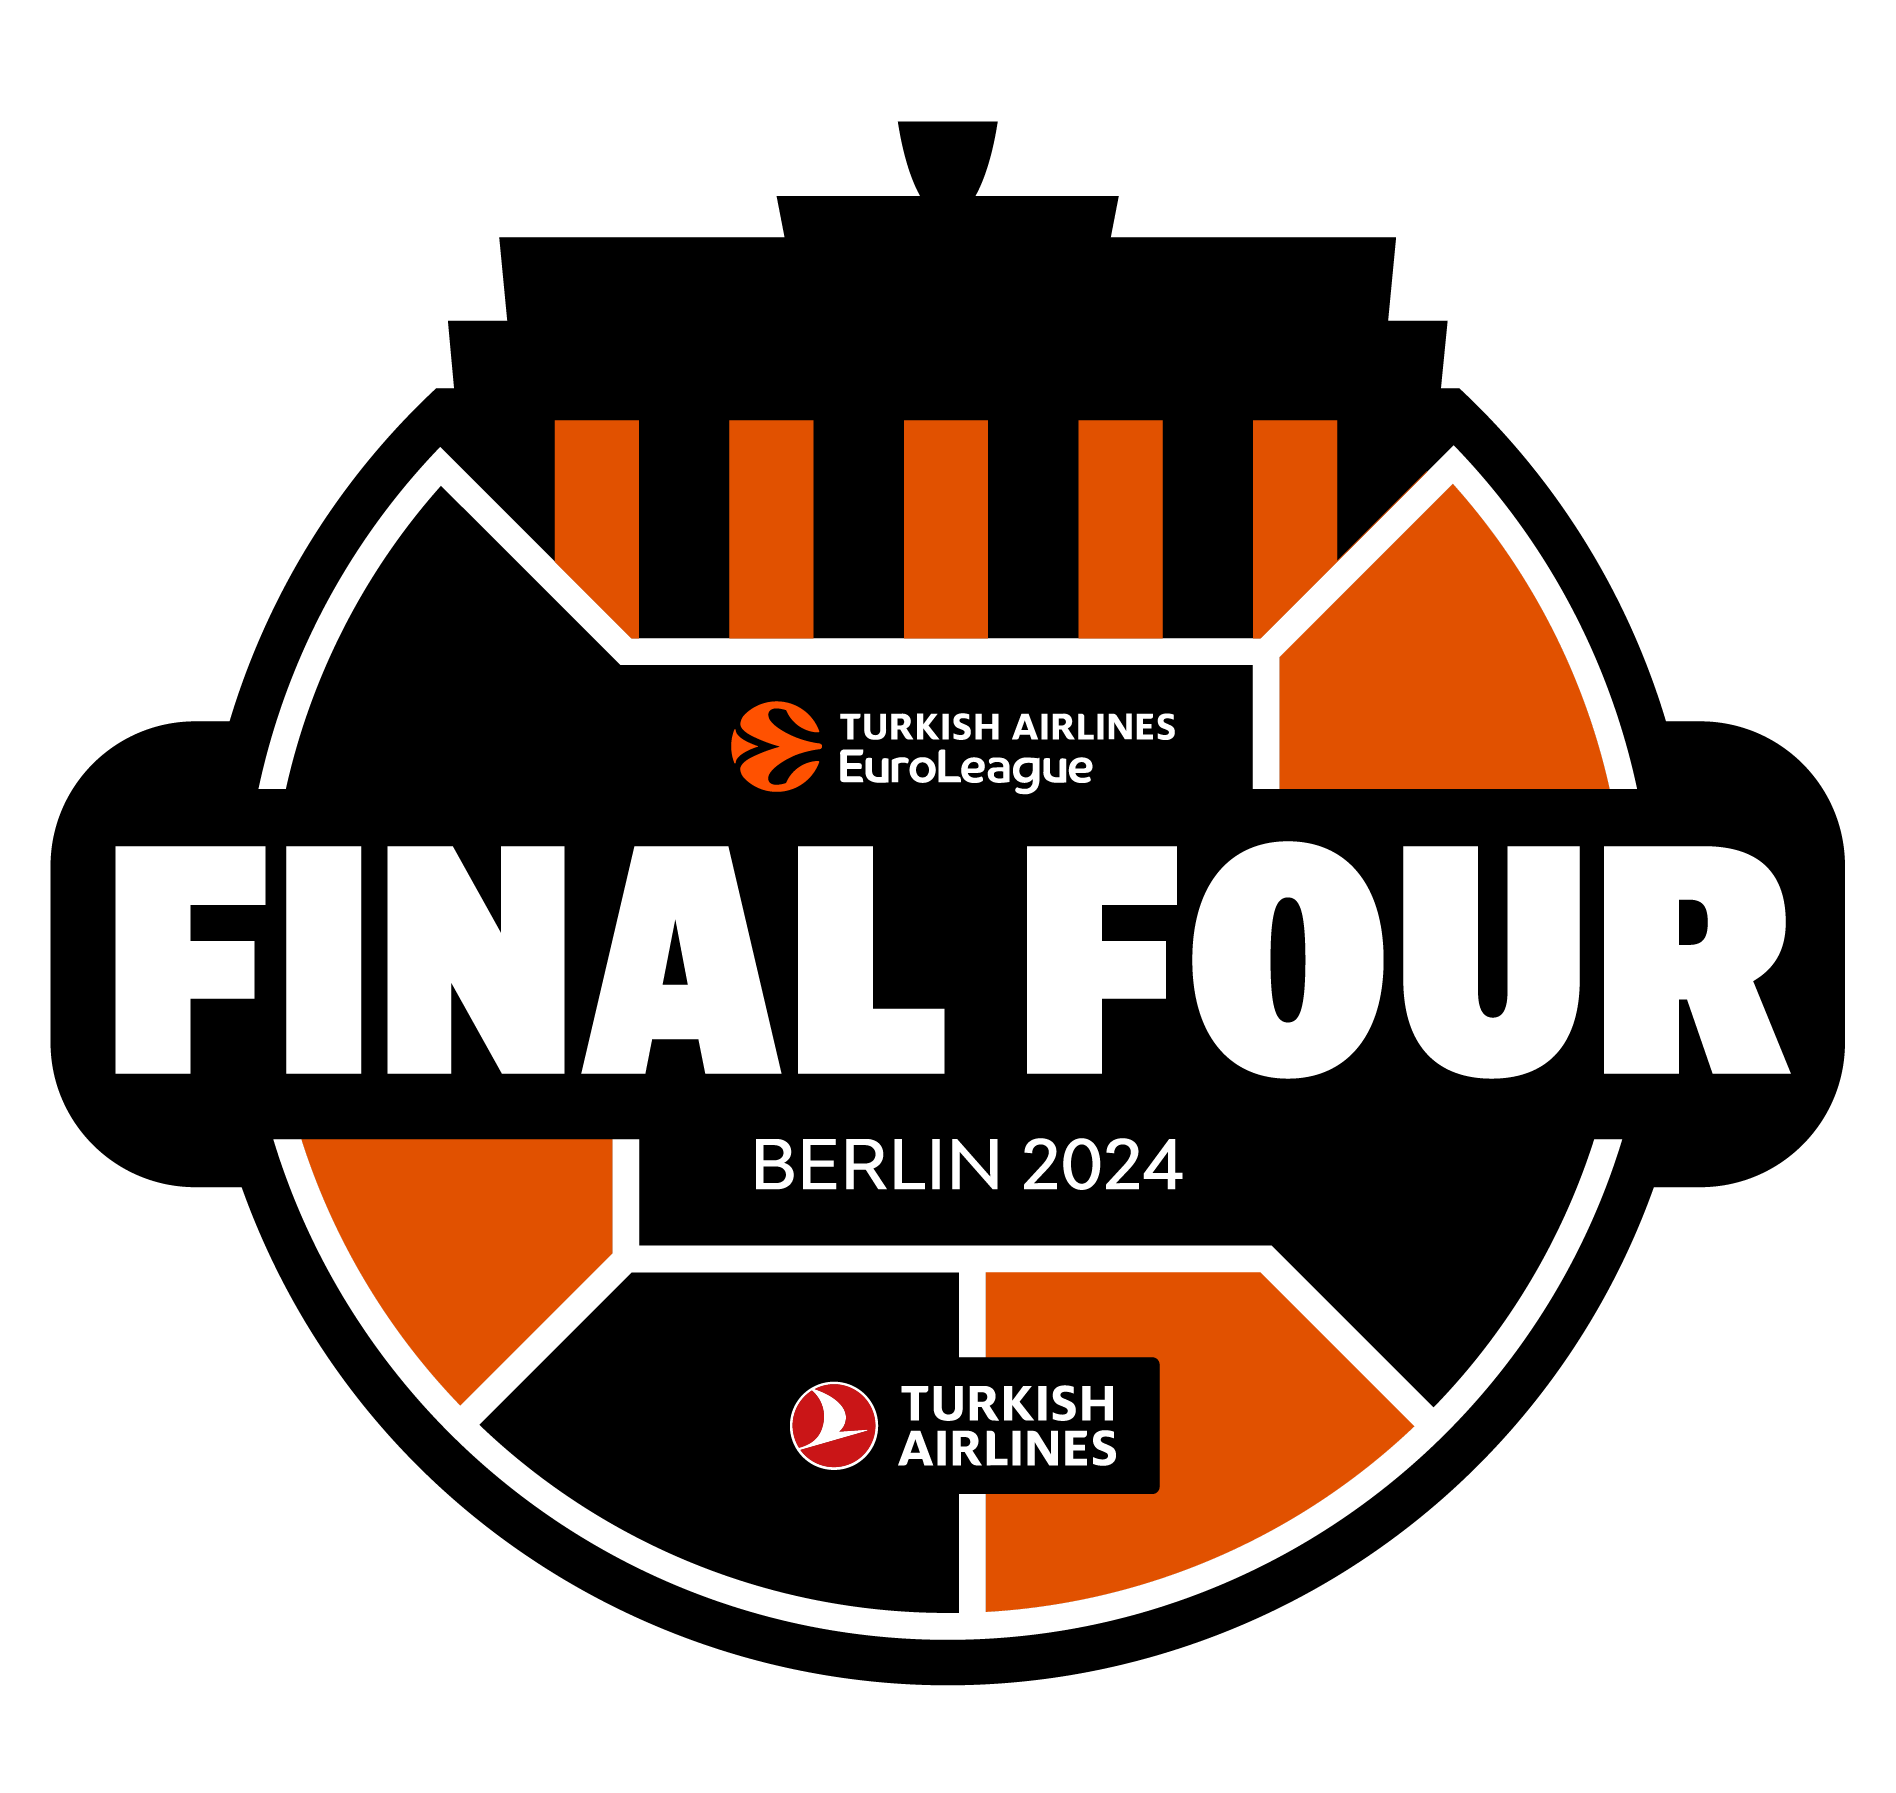 Euroleague final four logo